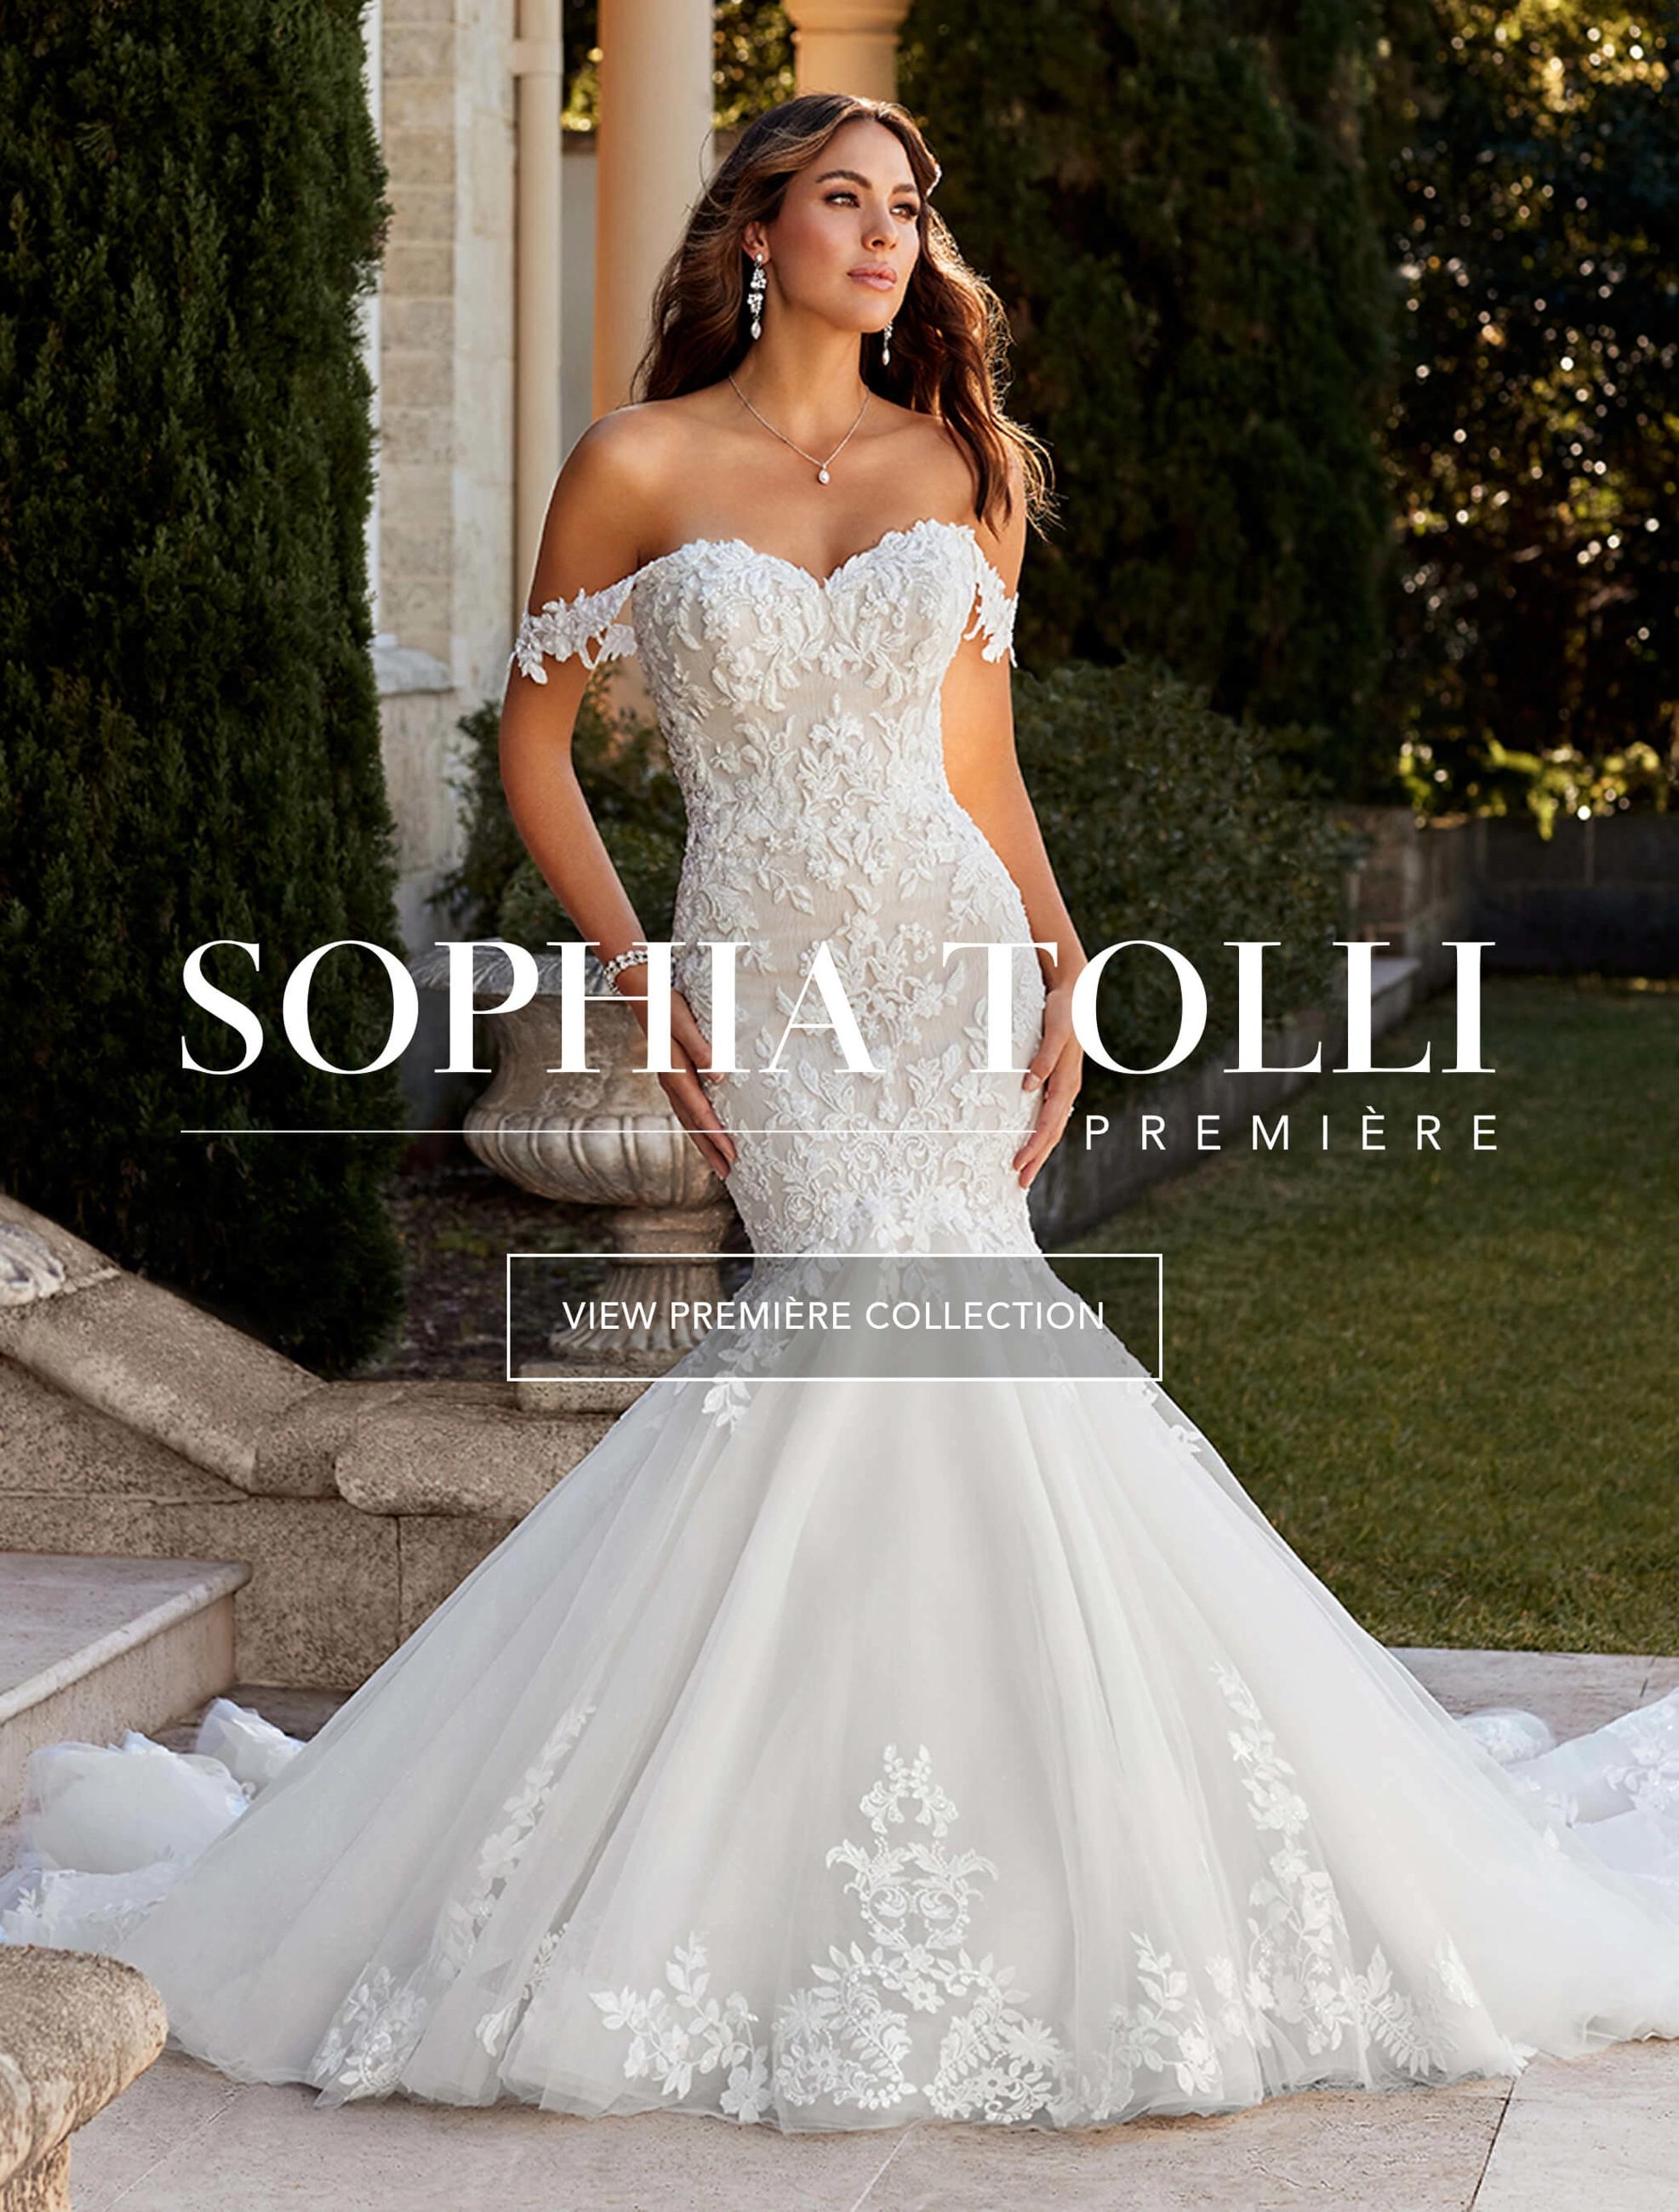 Sophia Tolli Première Wedding Dresses Mobile Image